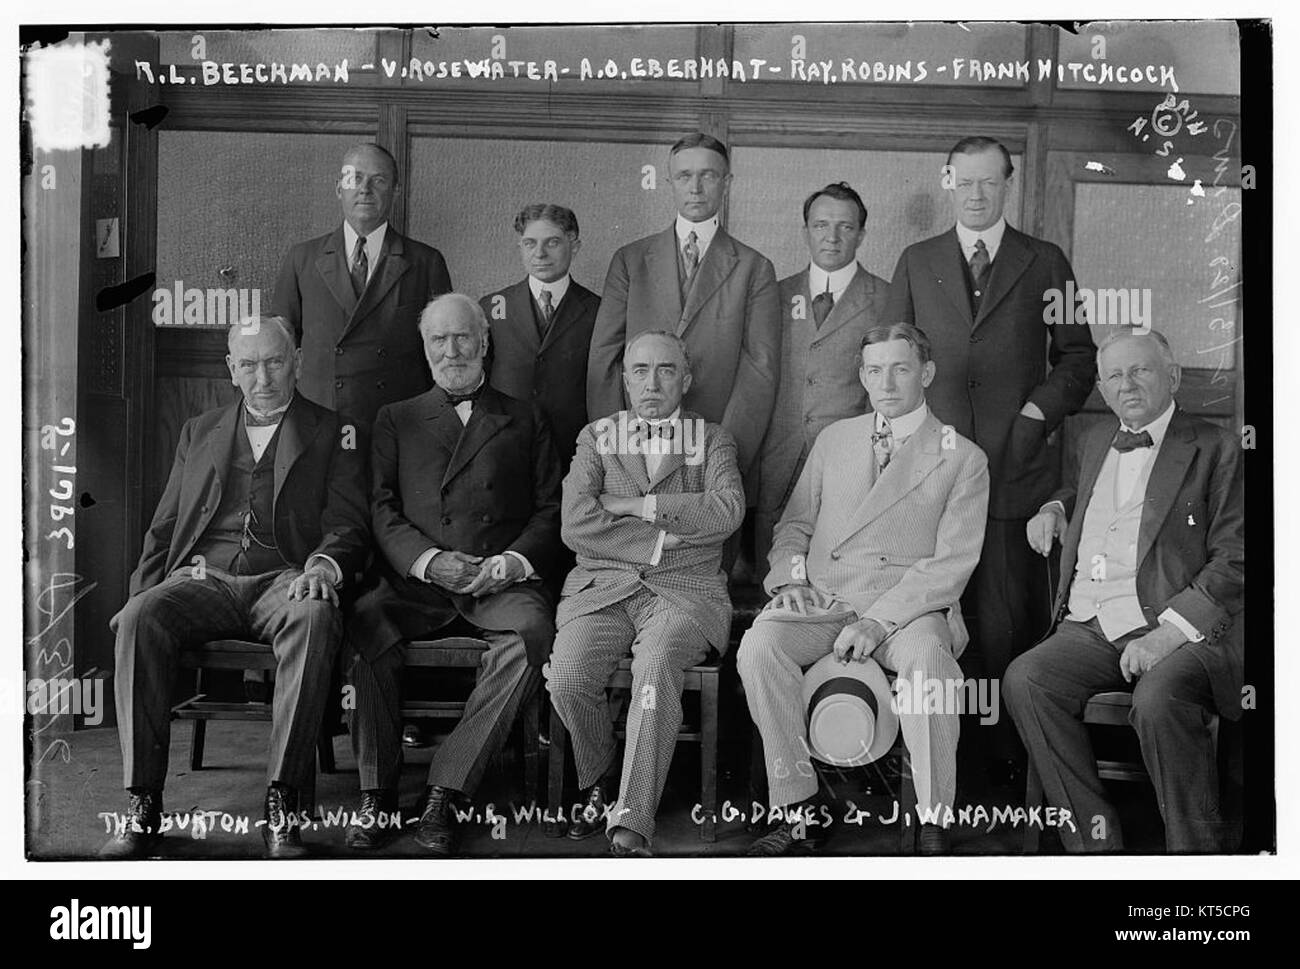 R.L. Beeckman, V. Rosewater, A.O. Eberhart, Ray. Robins, Frank Hitchcock, The. Burton, Jos. Wilson, W.R. Willcox, C.G. Dawes, J. Wanamaker  (14440811990) Stock Photo